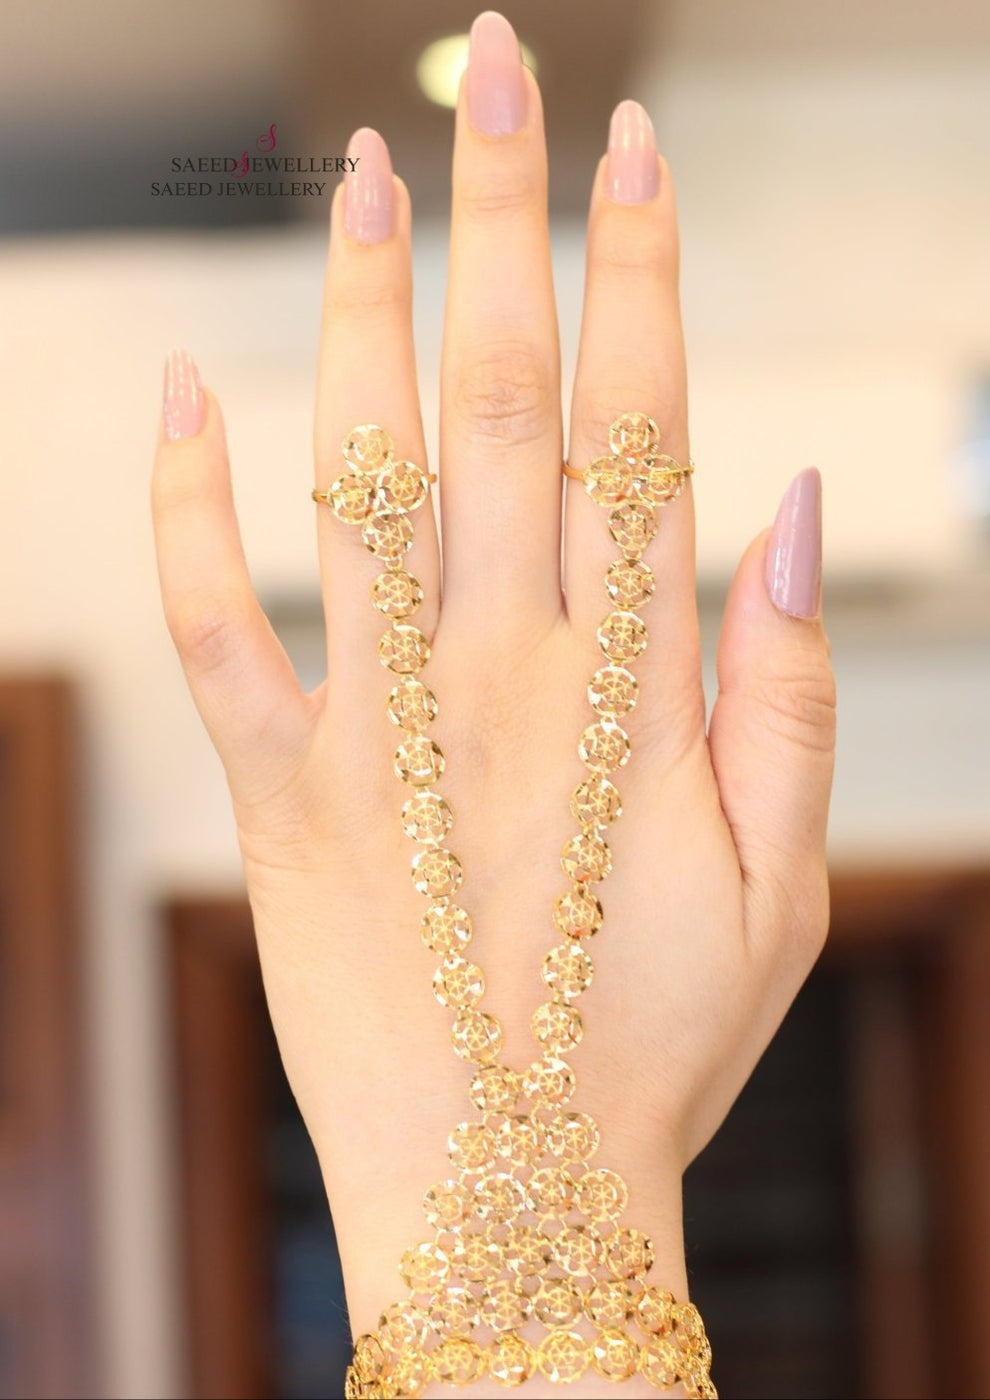 21K Gold Kuwaity Hand Bracelet by Saeed Jewelry - Image 3